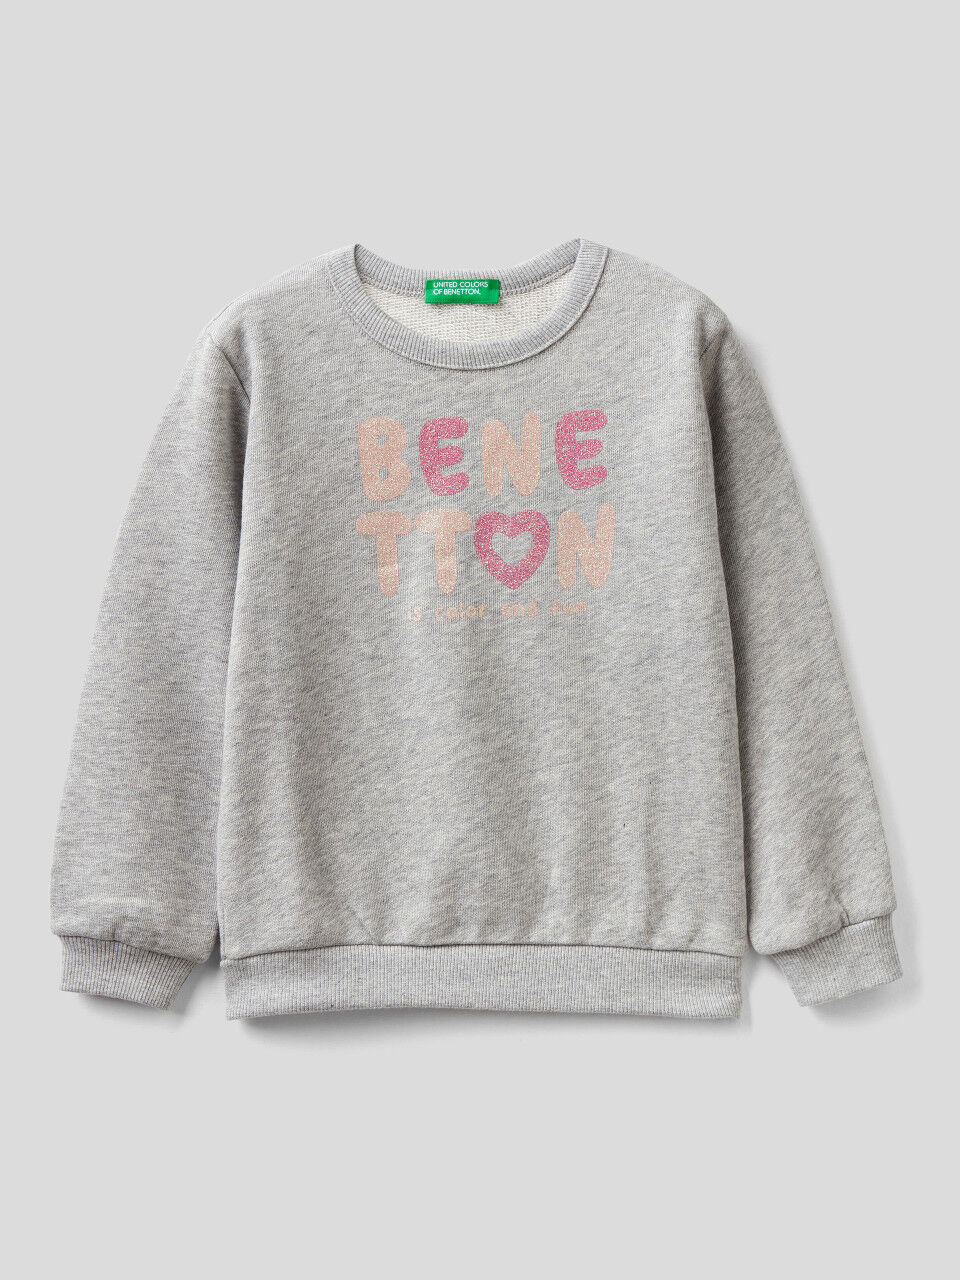 Sweatshirt in organic cotton with glittery print